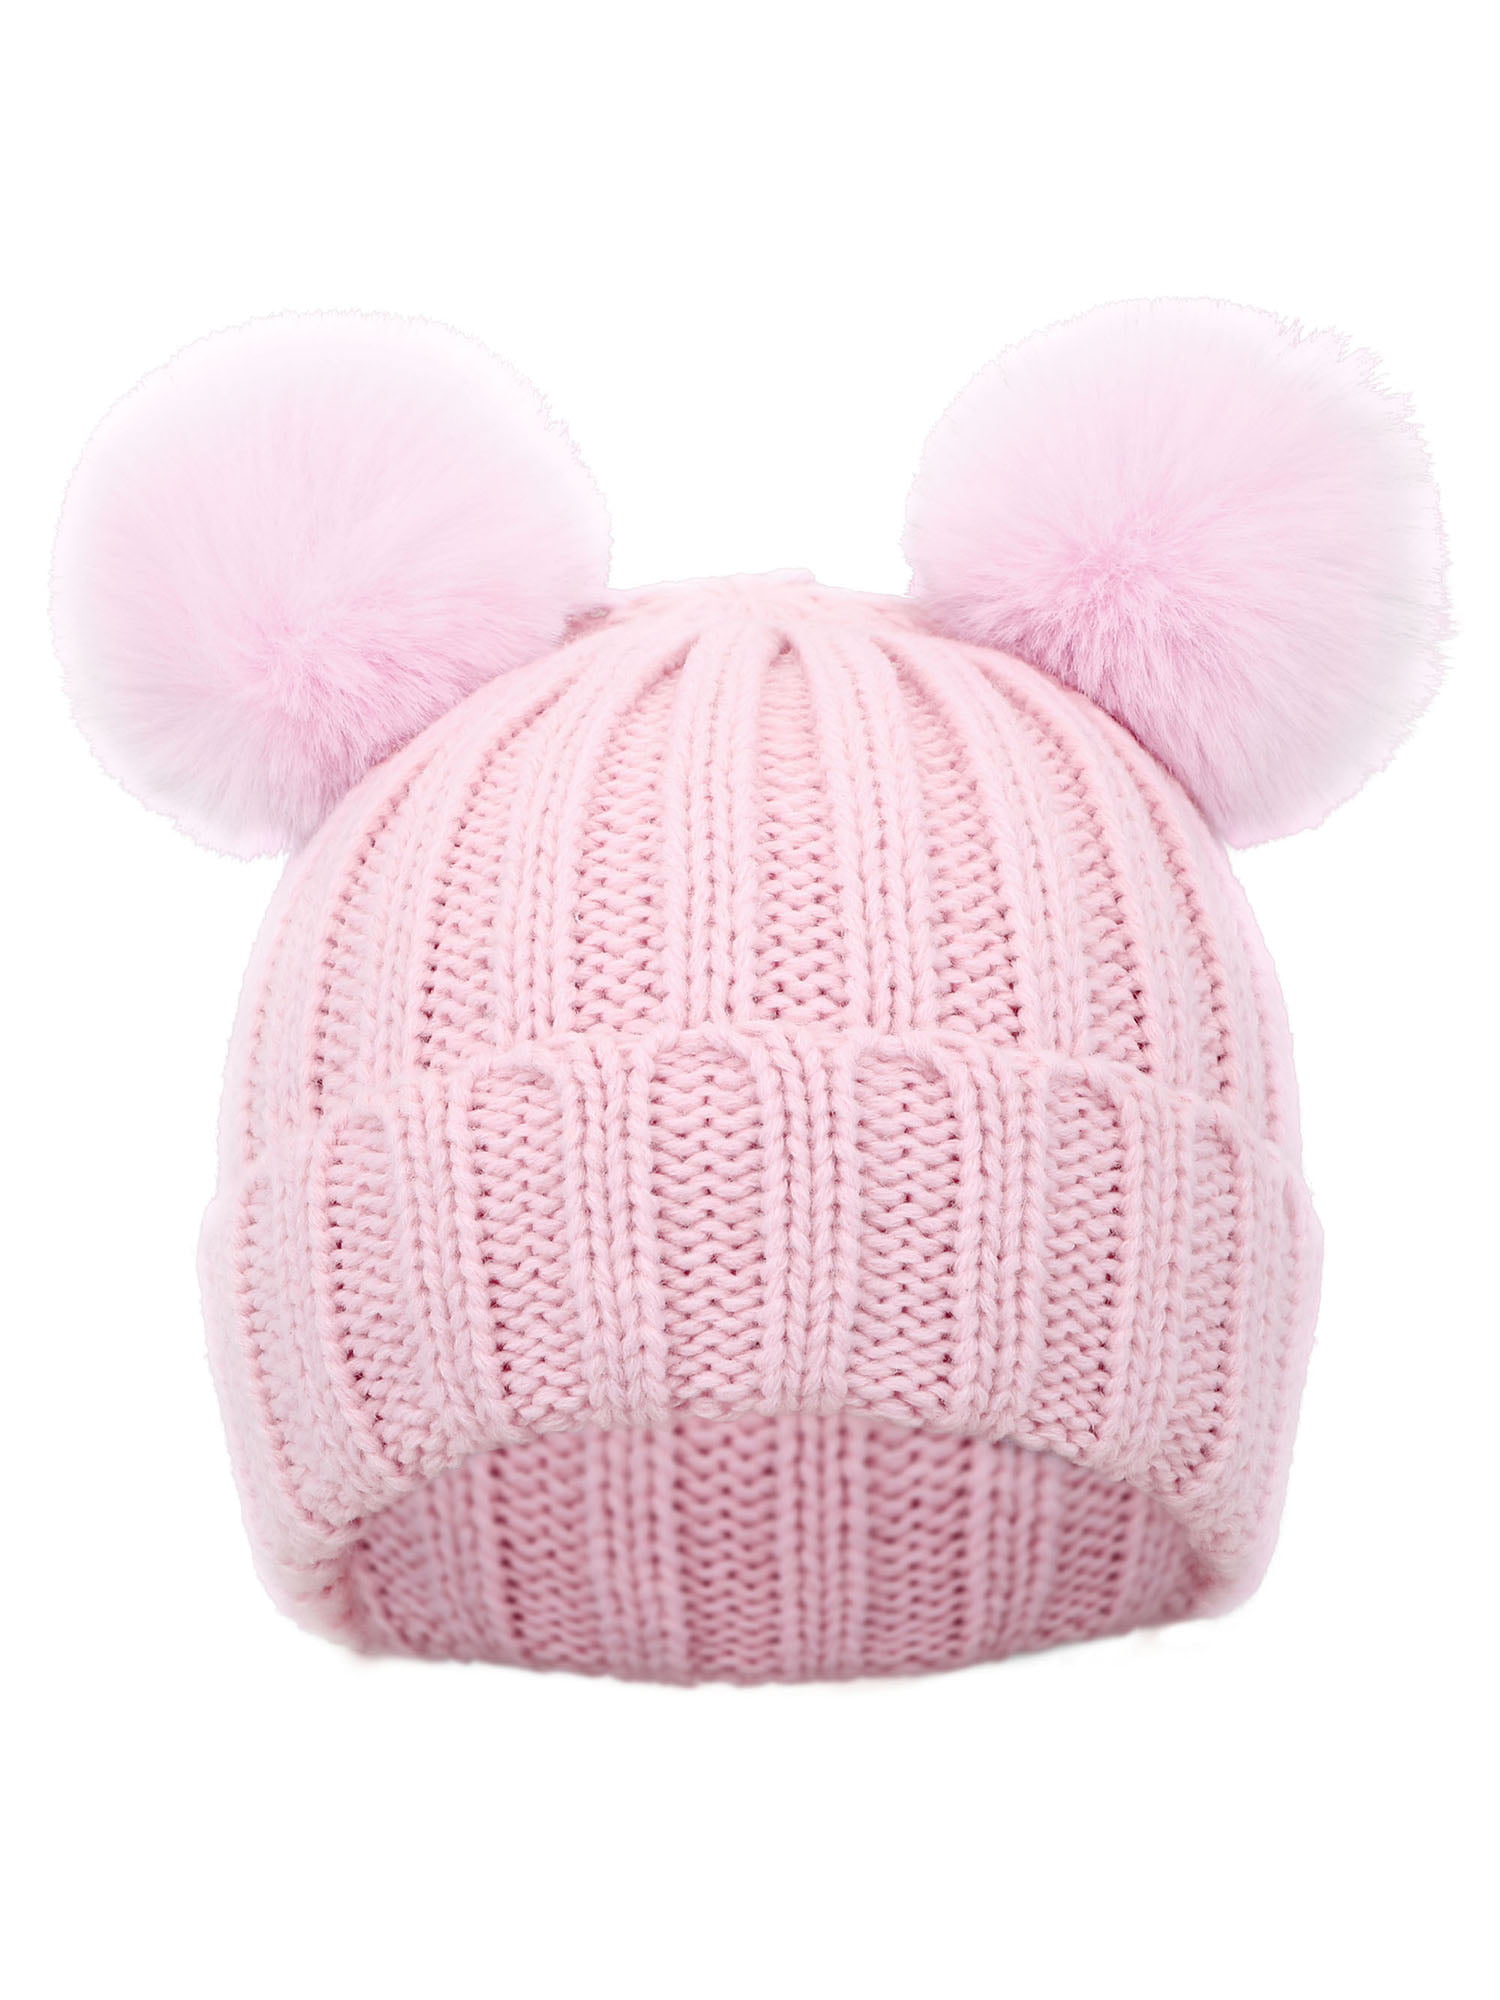 ENJOYFUR Toddler Girls Winter hat Baby Warm Knit Beanie Hats for Girls Ear Flaps Fur pom pom 5 Colors 